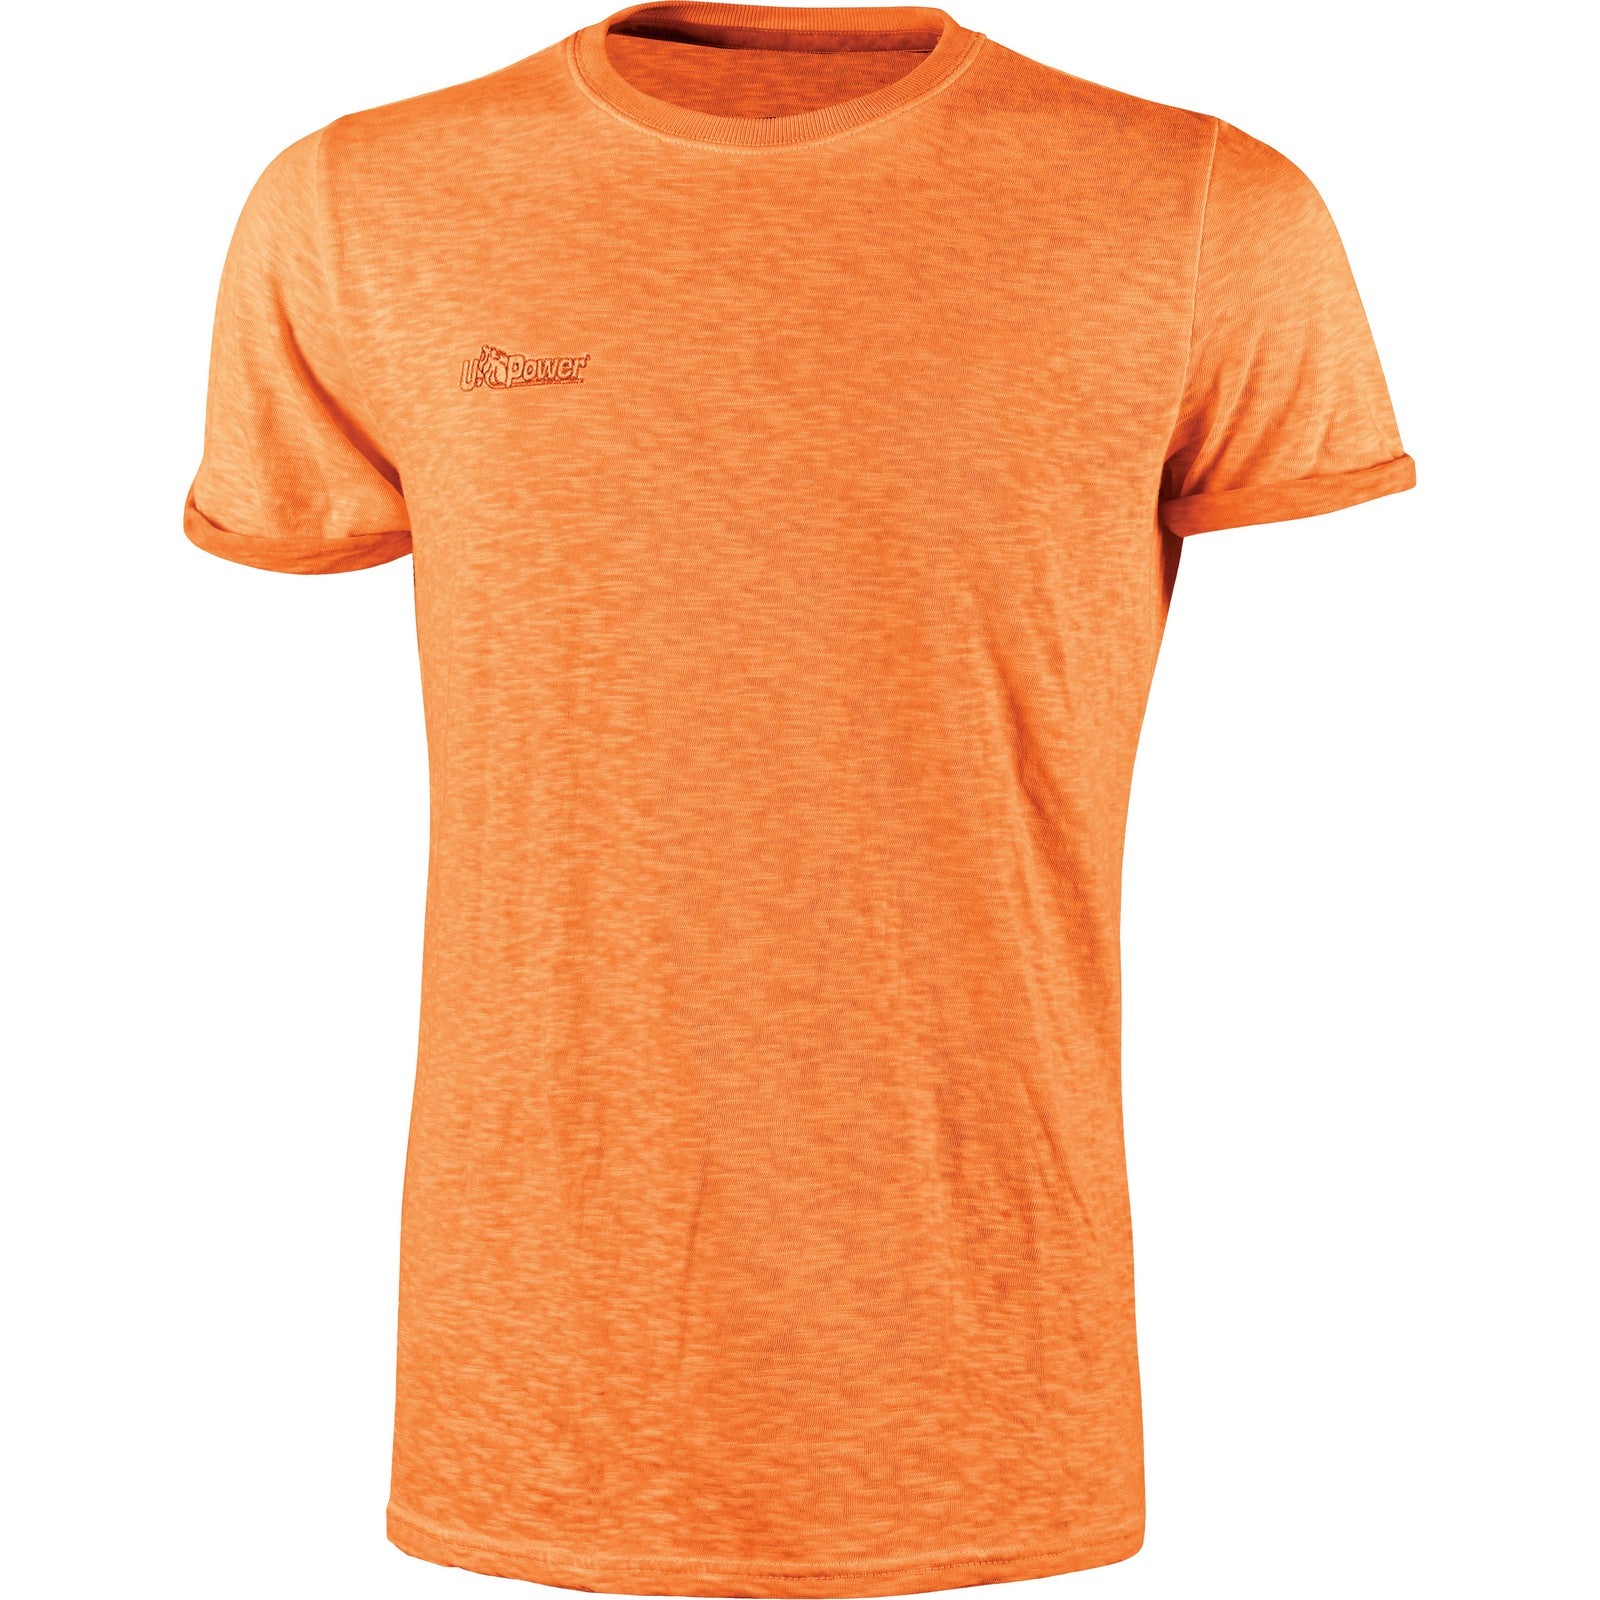 U-Power T-Shirt Fluo Arancio  tagliaXXL